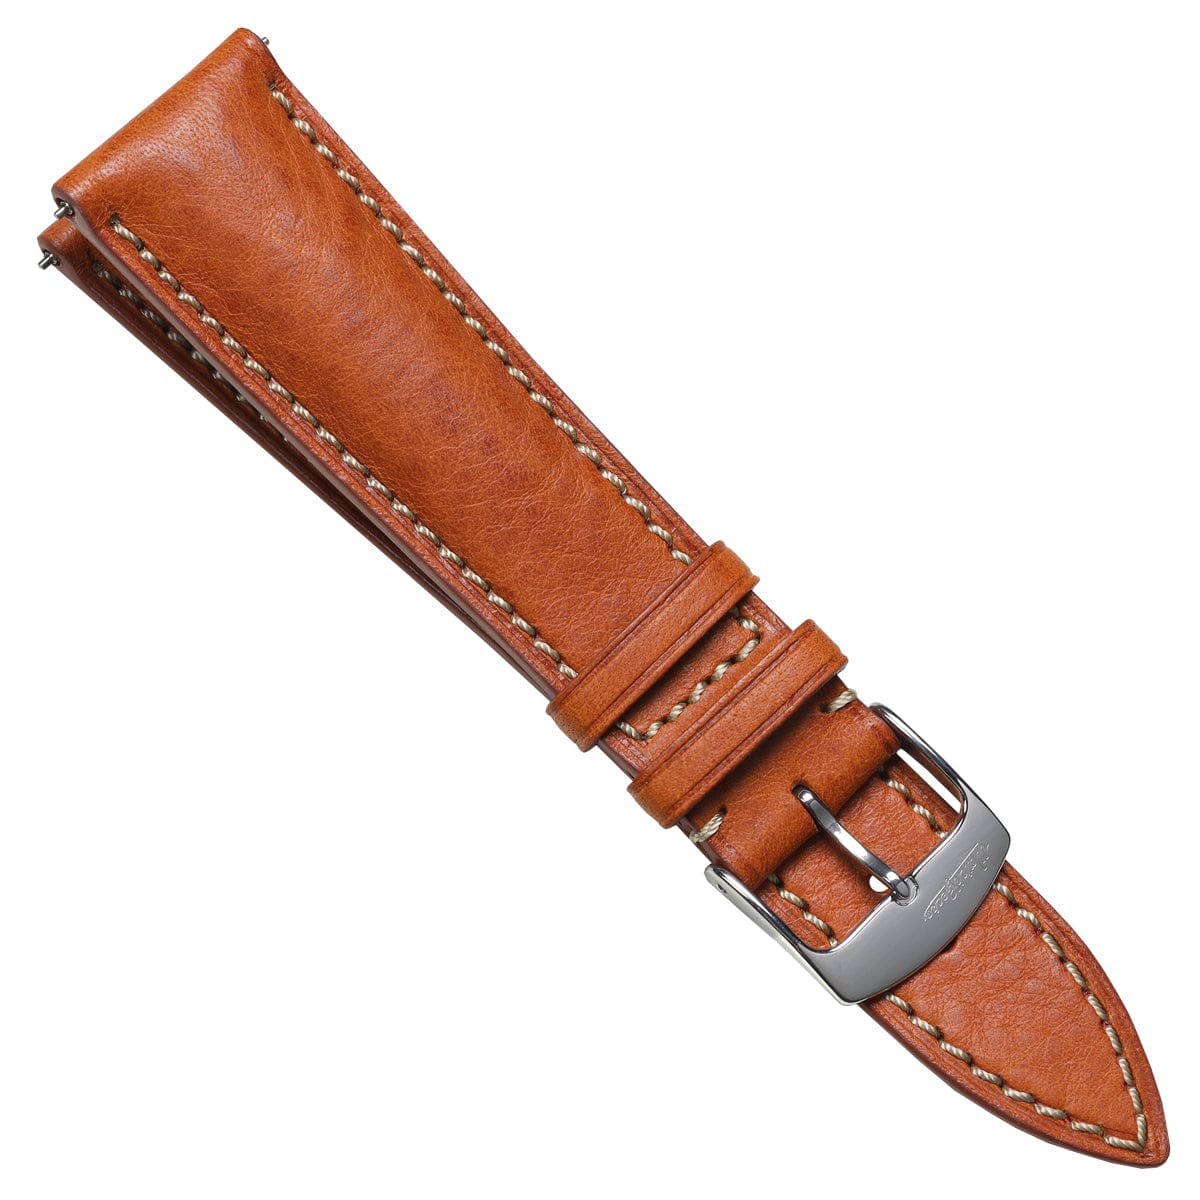 Stanton Badalassi Carlo Minerva Box Leather Padded Watch Strap - Coral